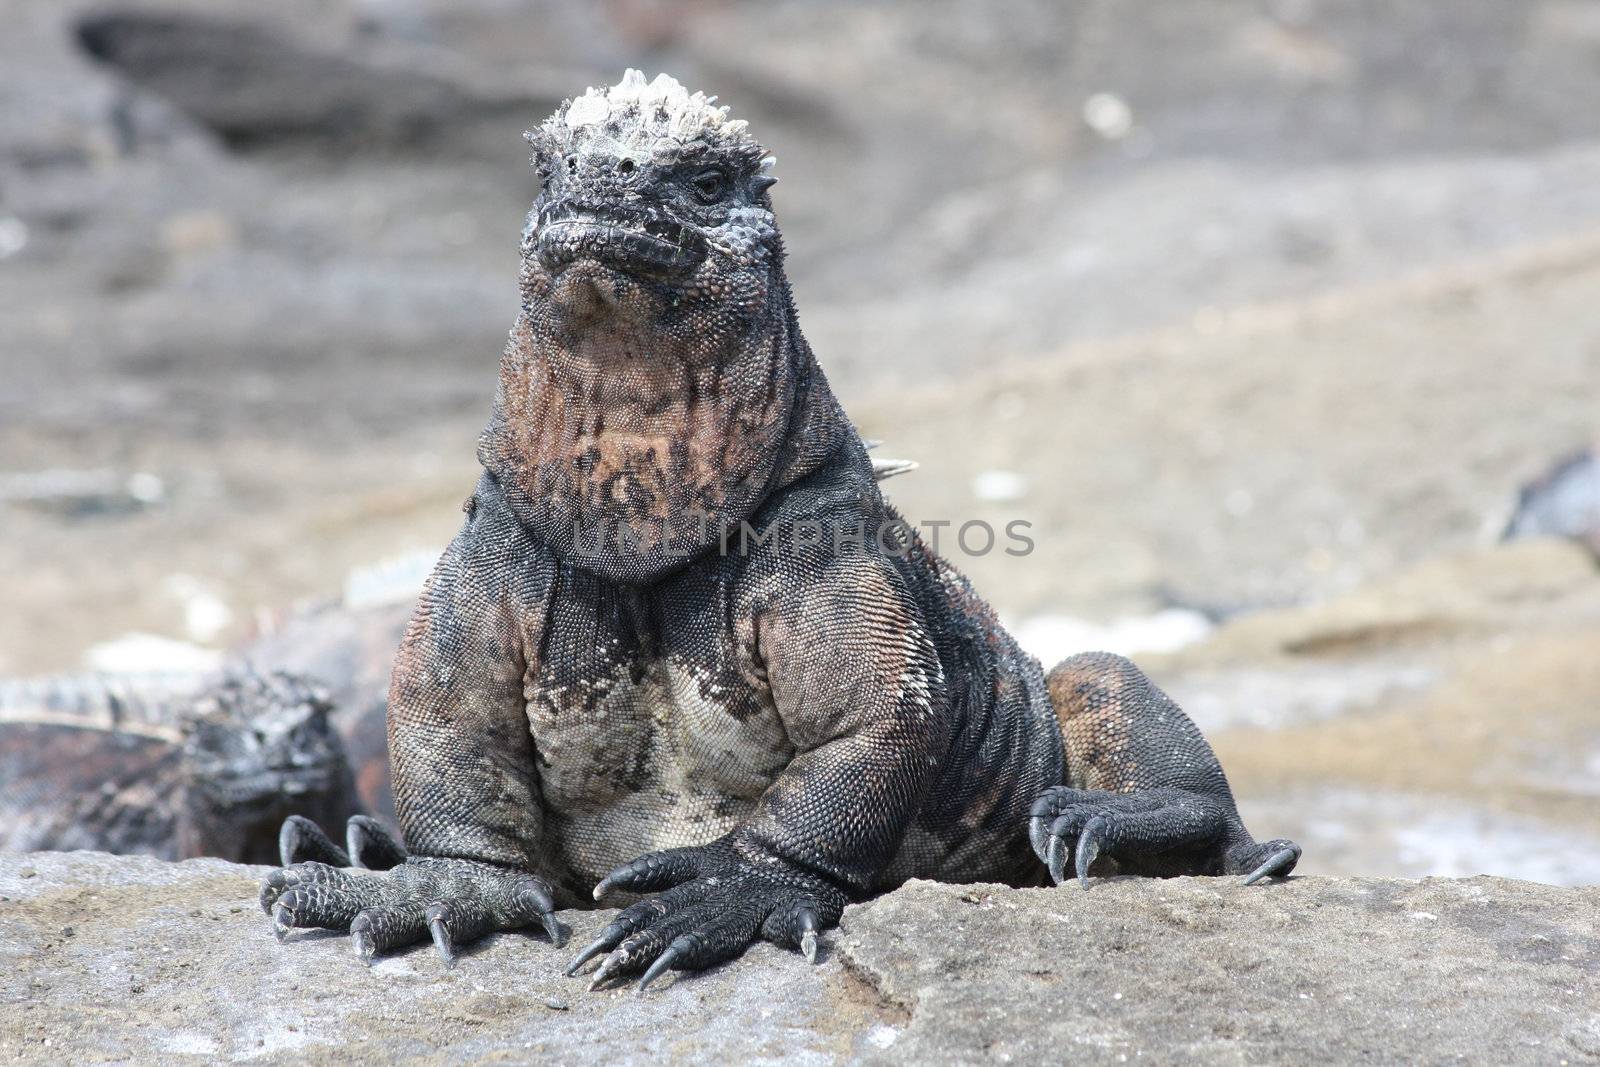 The Galagoa reptile marine iguana is a special animal